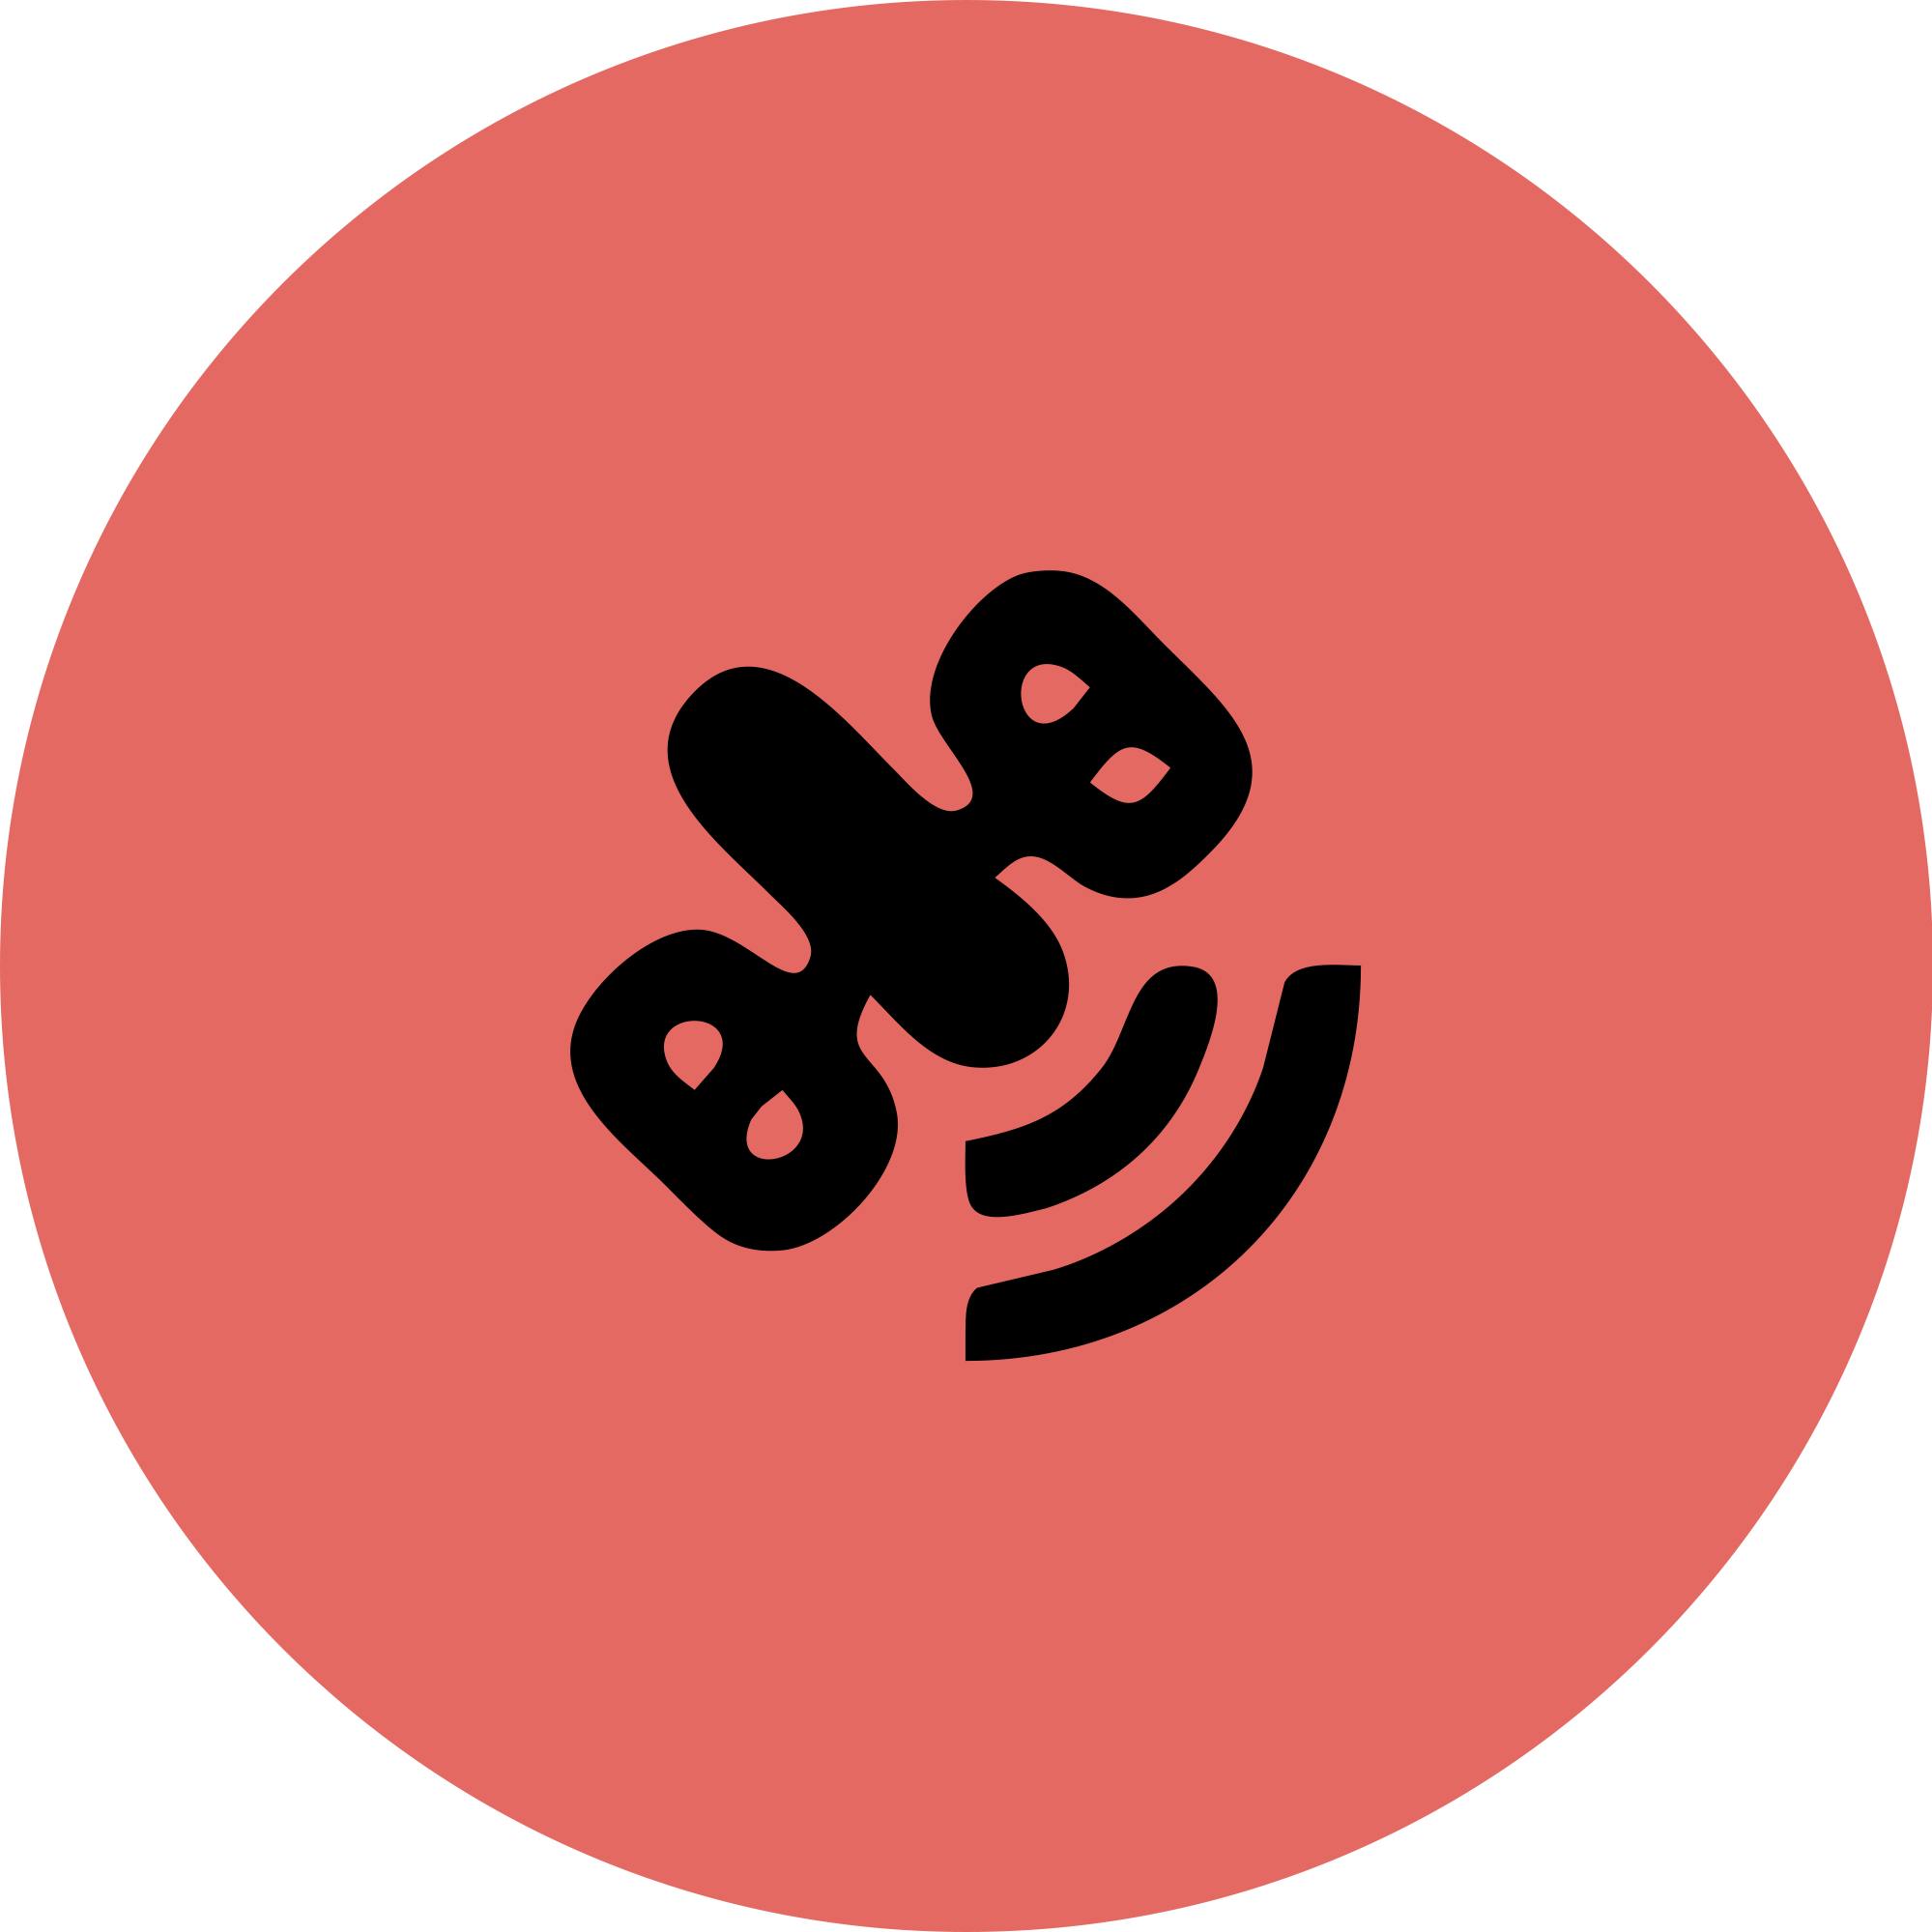 Pixel 9 satellite gateway app icon: a black satellite icon over a pinkish-red circular background